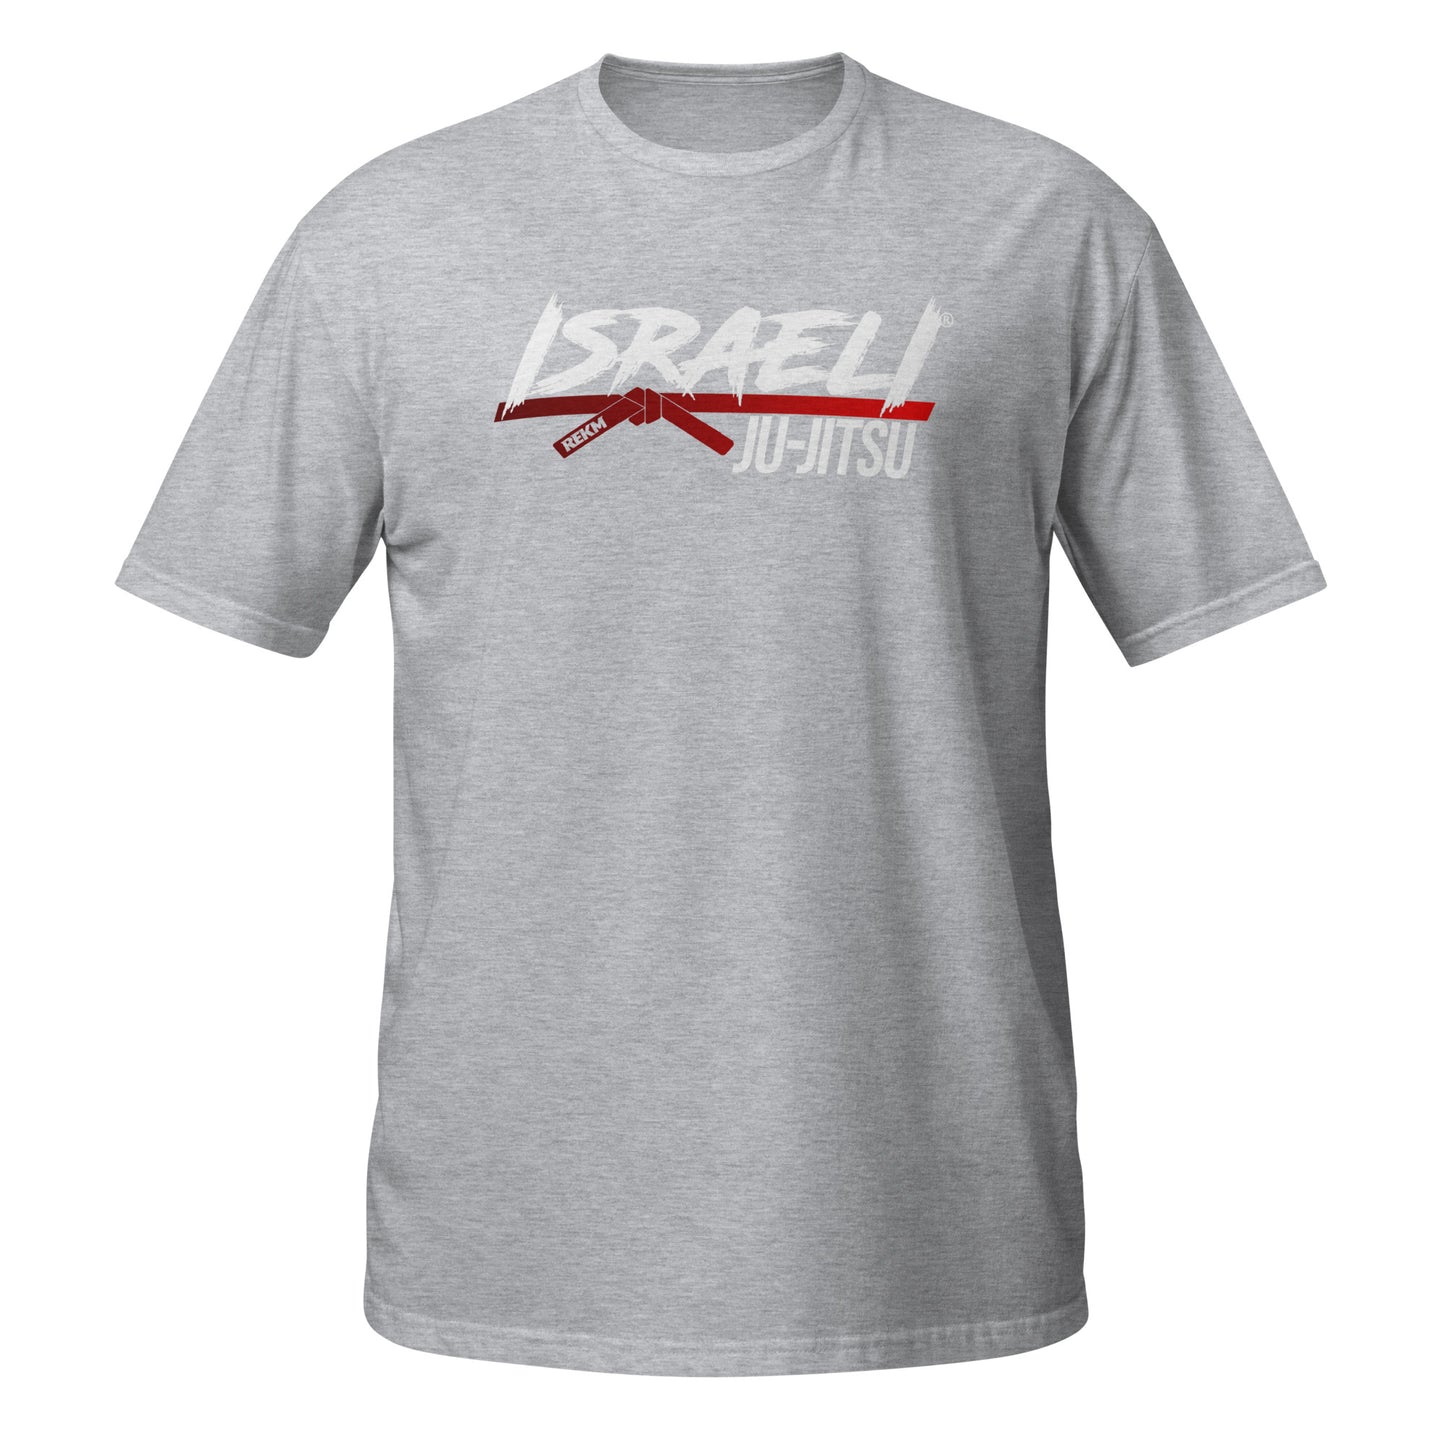 Israeli Ju-Jitsu Short-Sleeve Unisex T-Shirt